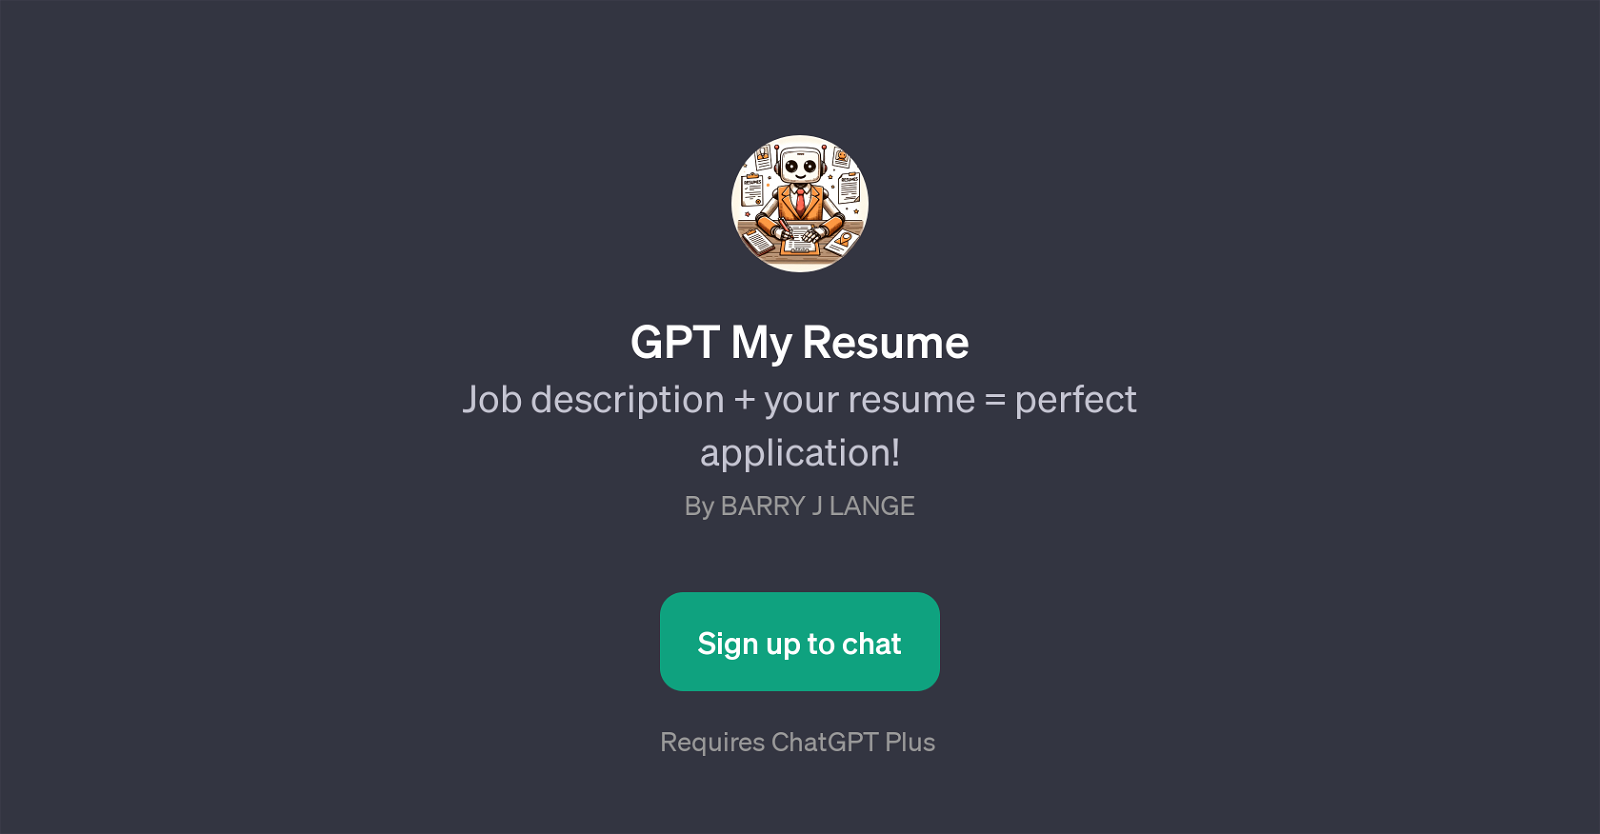 GPT My Resume website